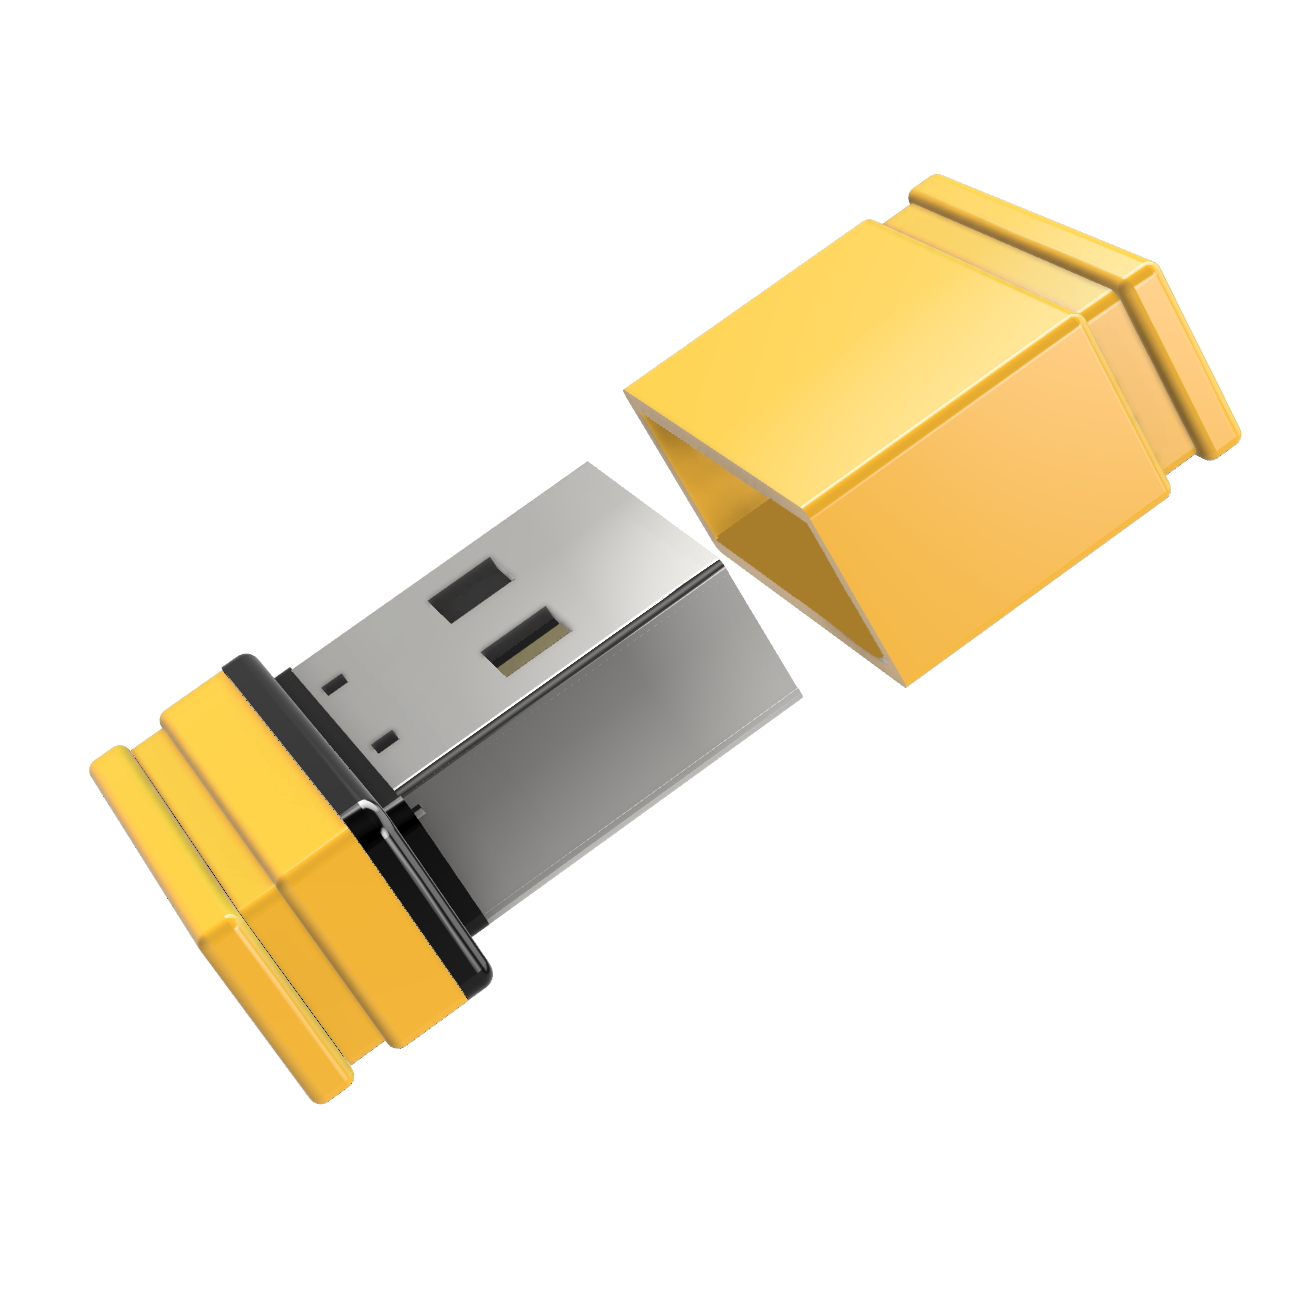 GB) Mini P1 (Gelb/Schwarz, USB GERMANY USB-Stick ®ULTRA 1